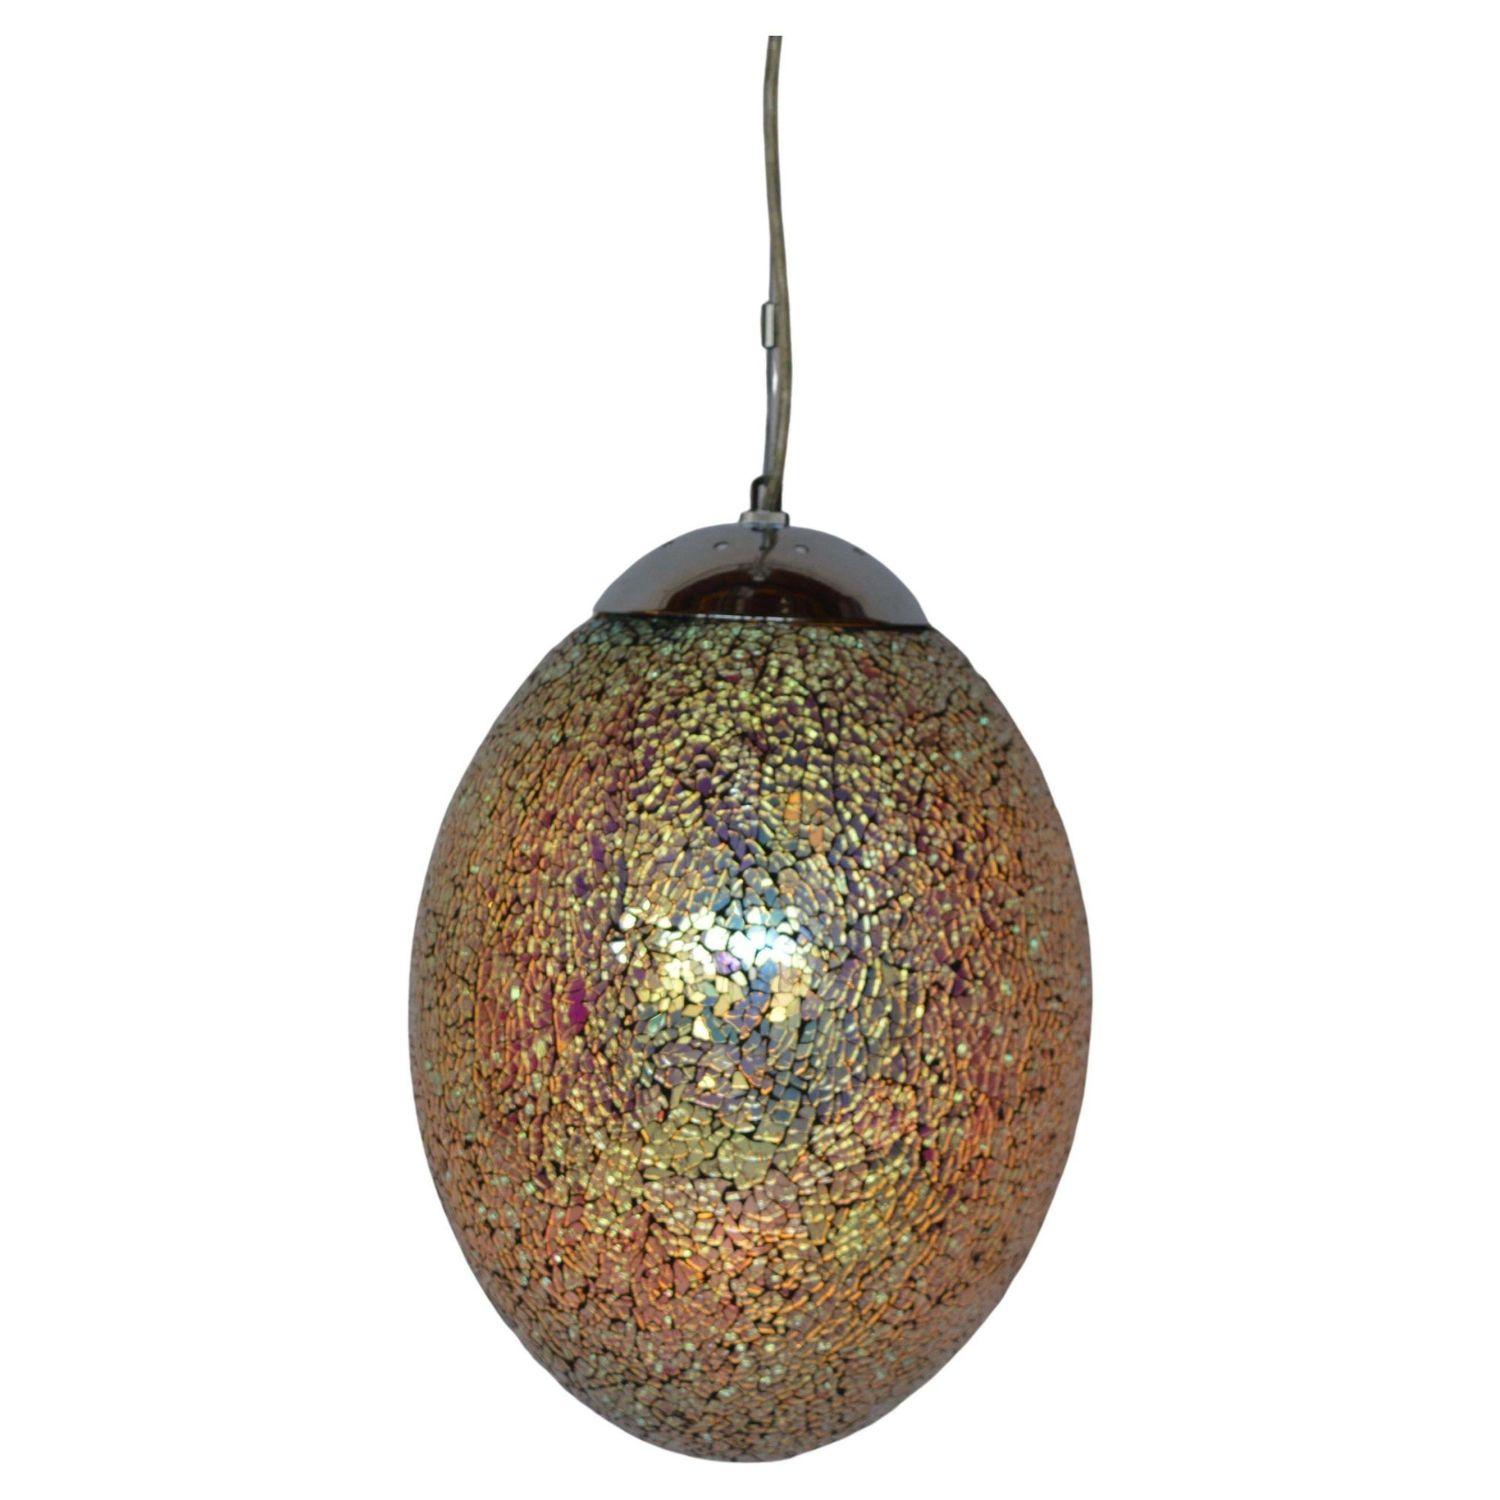 Set of five Italian iridescent cracking glass pendant, 1980s.